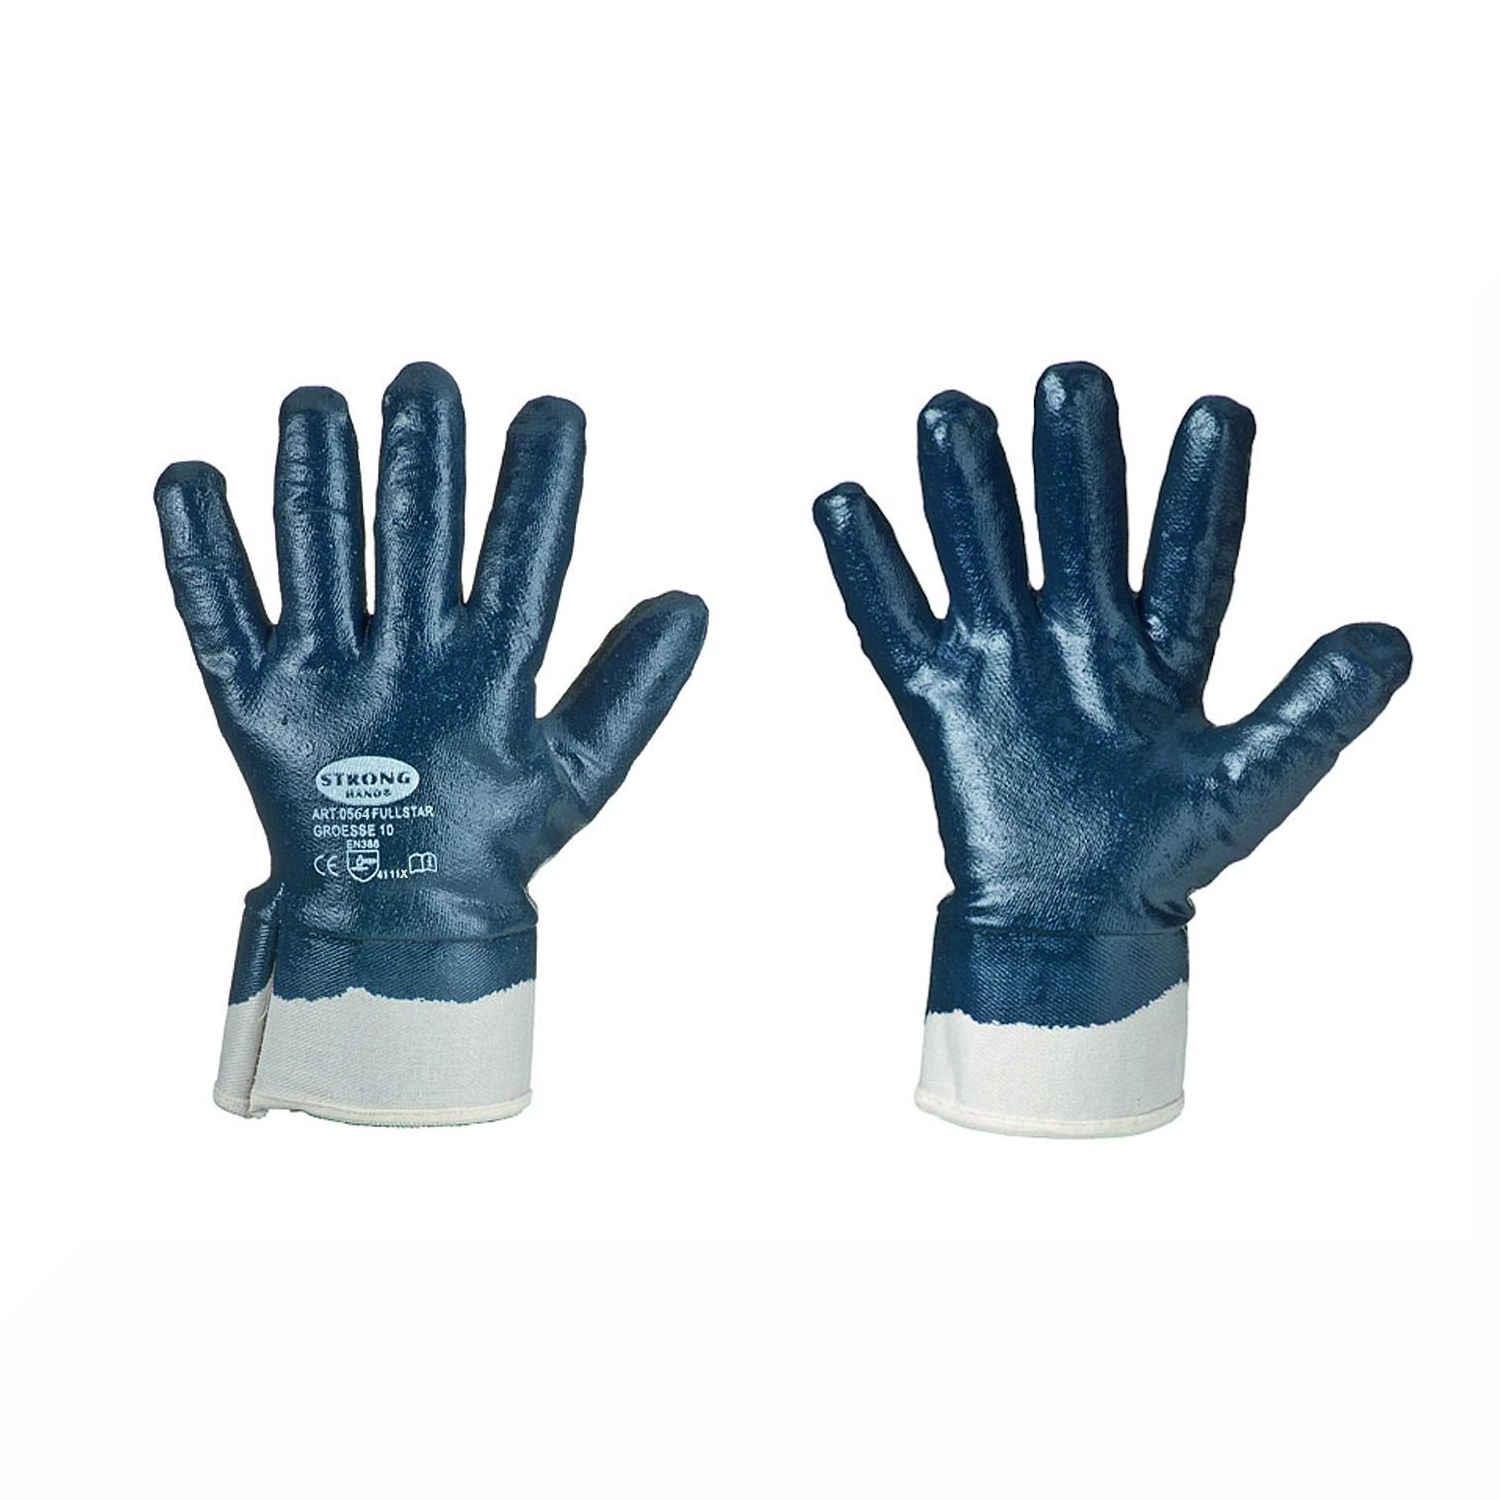 Fullstar Stronghand Nitril Handschuh blau Gr. 11